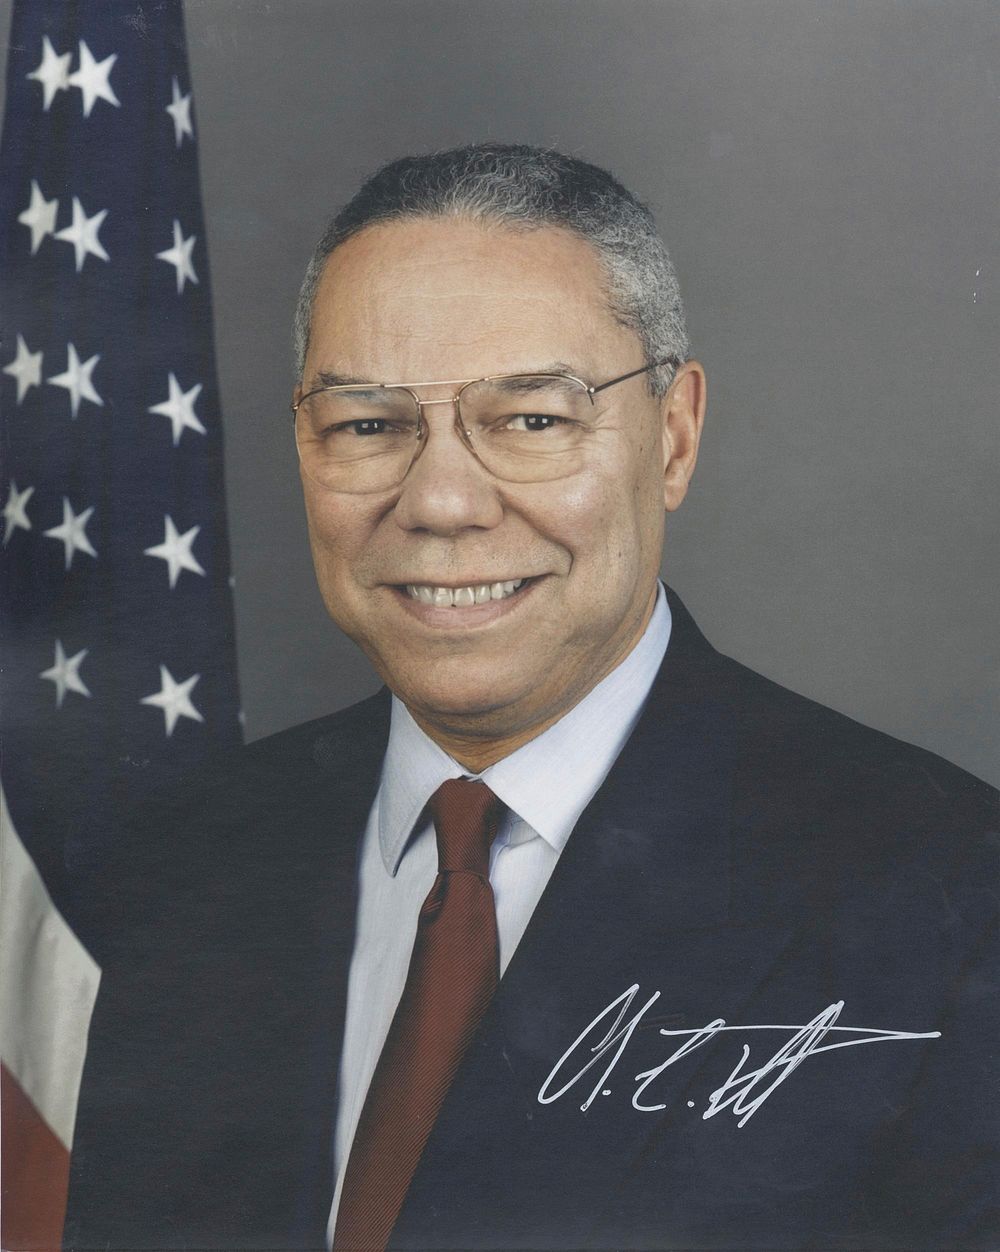 Colin L. Powell, U.S. Secretary of StateColin L. Powell, U.S. Secretary of State, January 20, 2001 to January 25, 2005.…